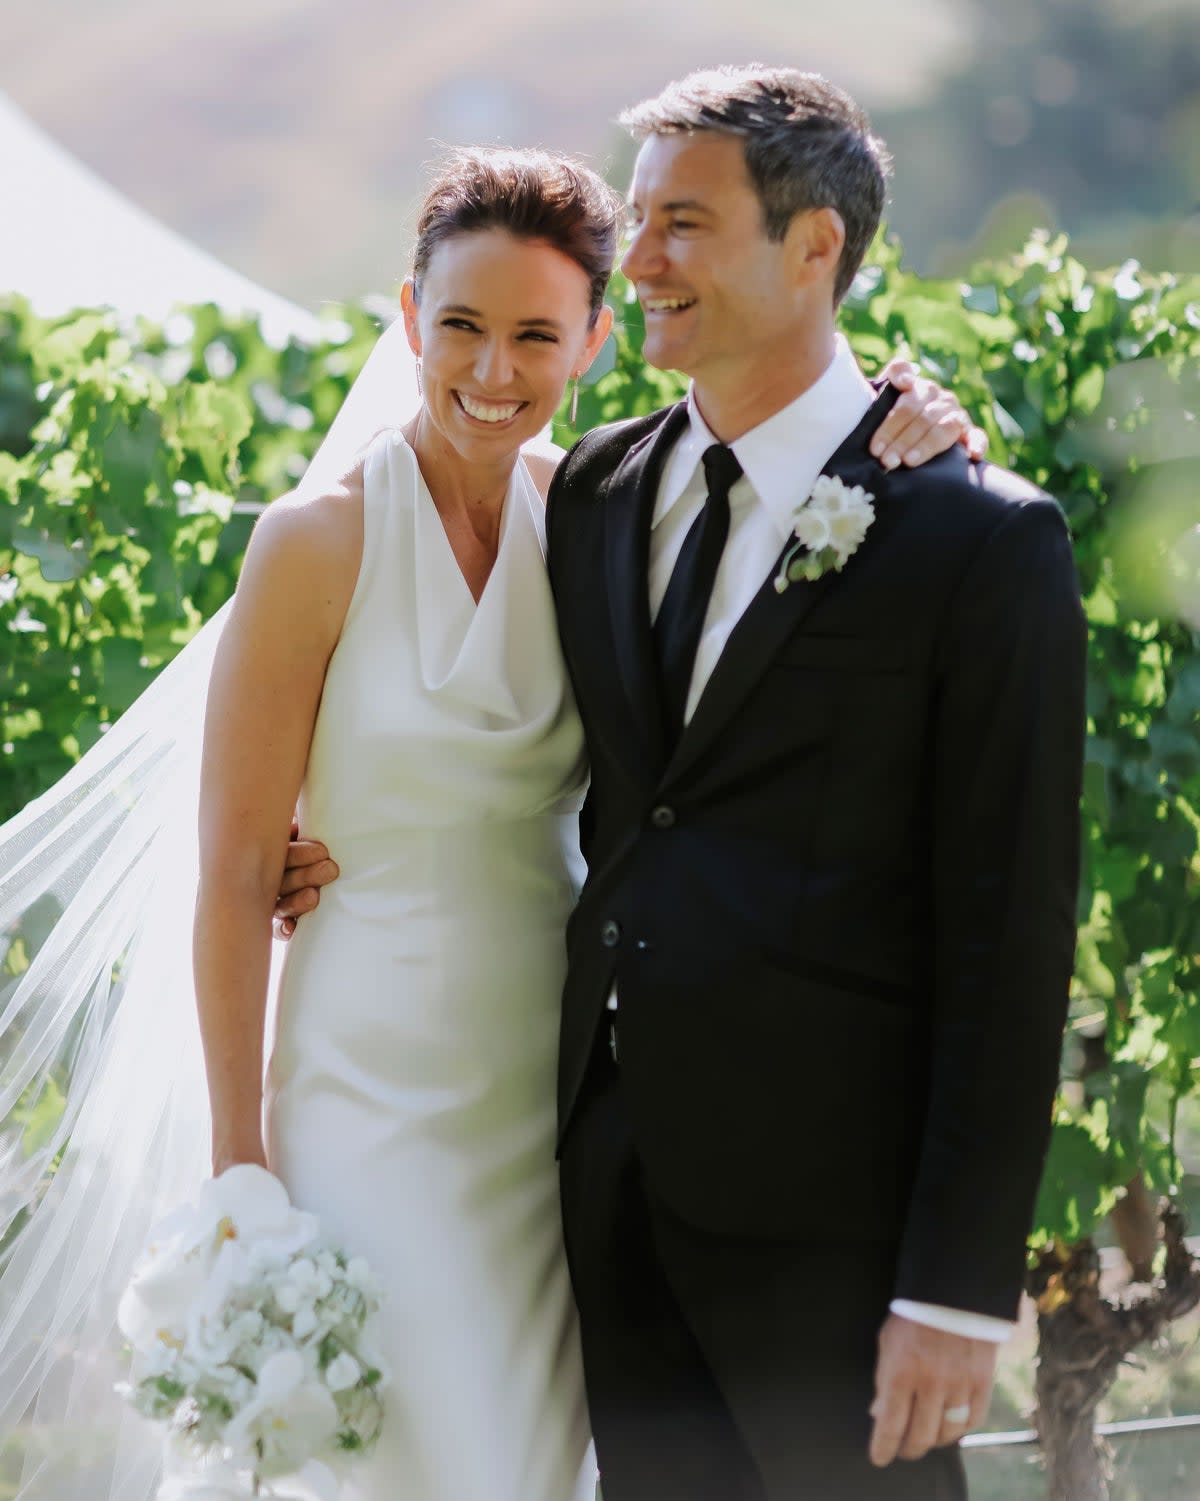 Jacinda Ardern and Clarke Gayford at their wedding (AP)